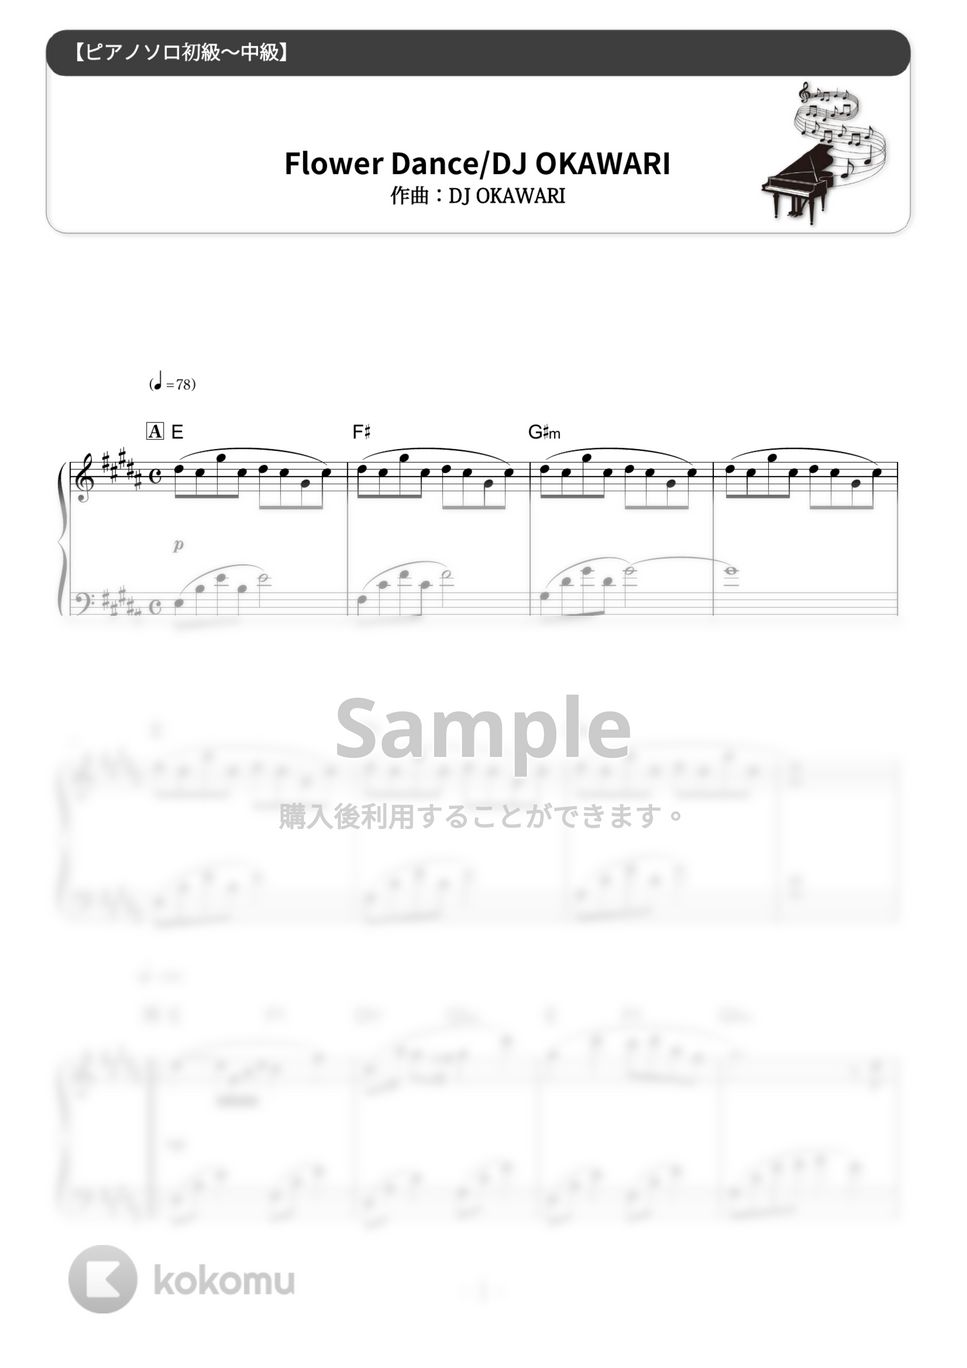 DJ OKAWARI - Flower Dance (難易度:★★☆☆☆) by Dさん